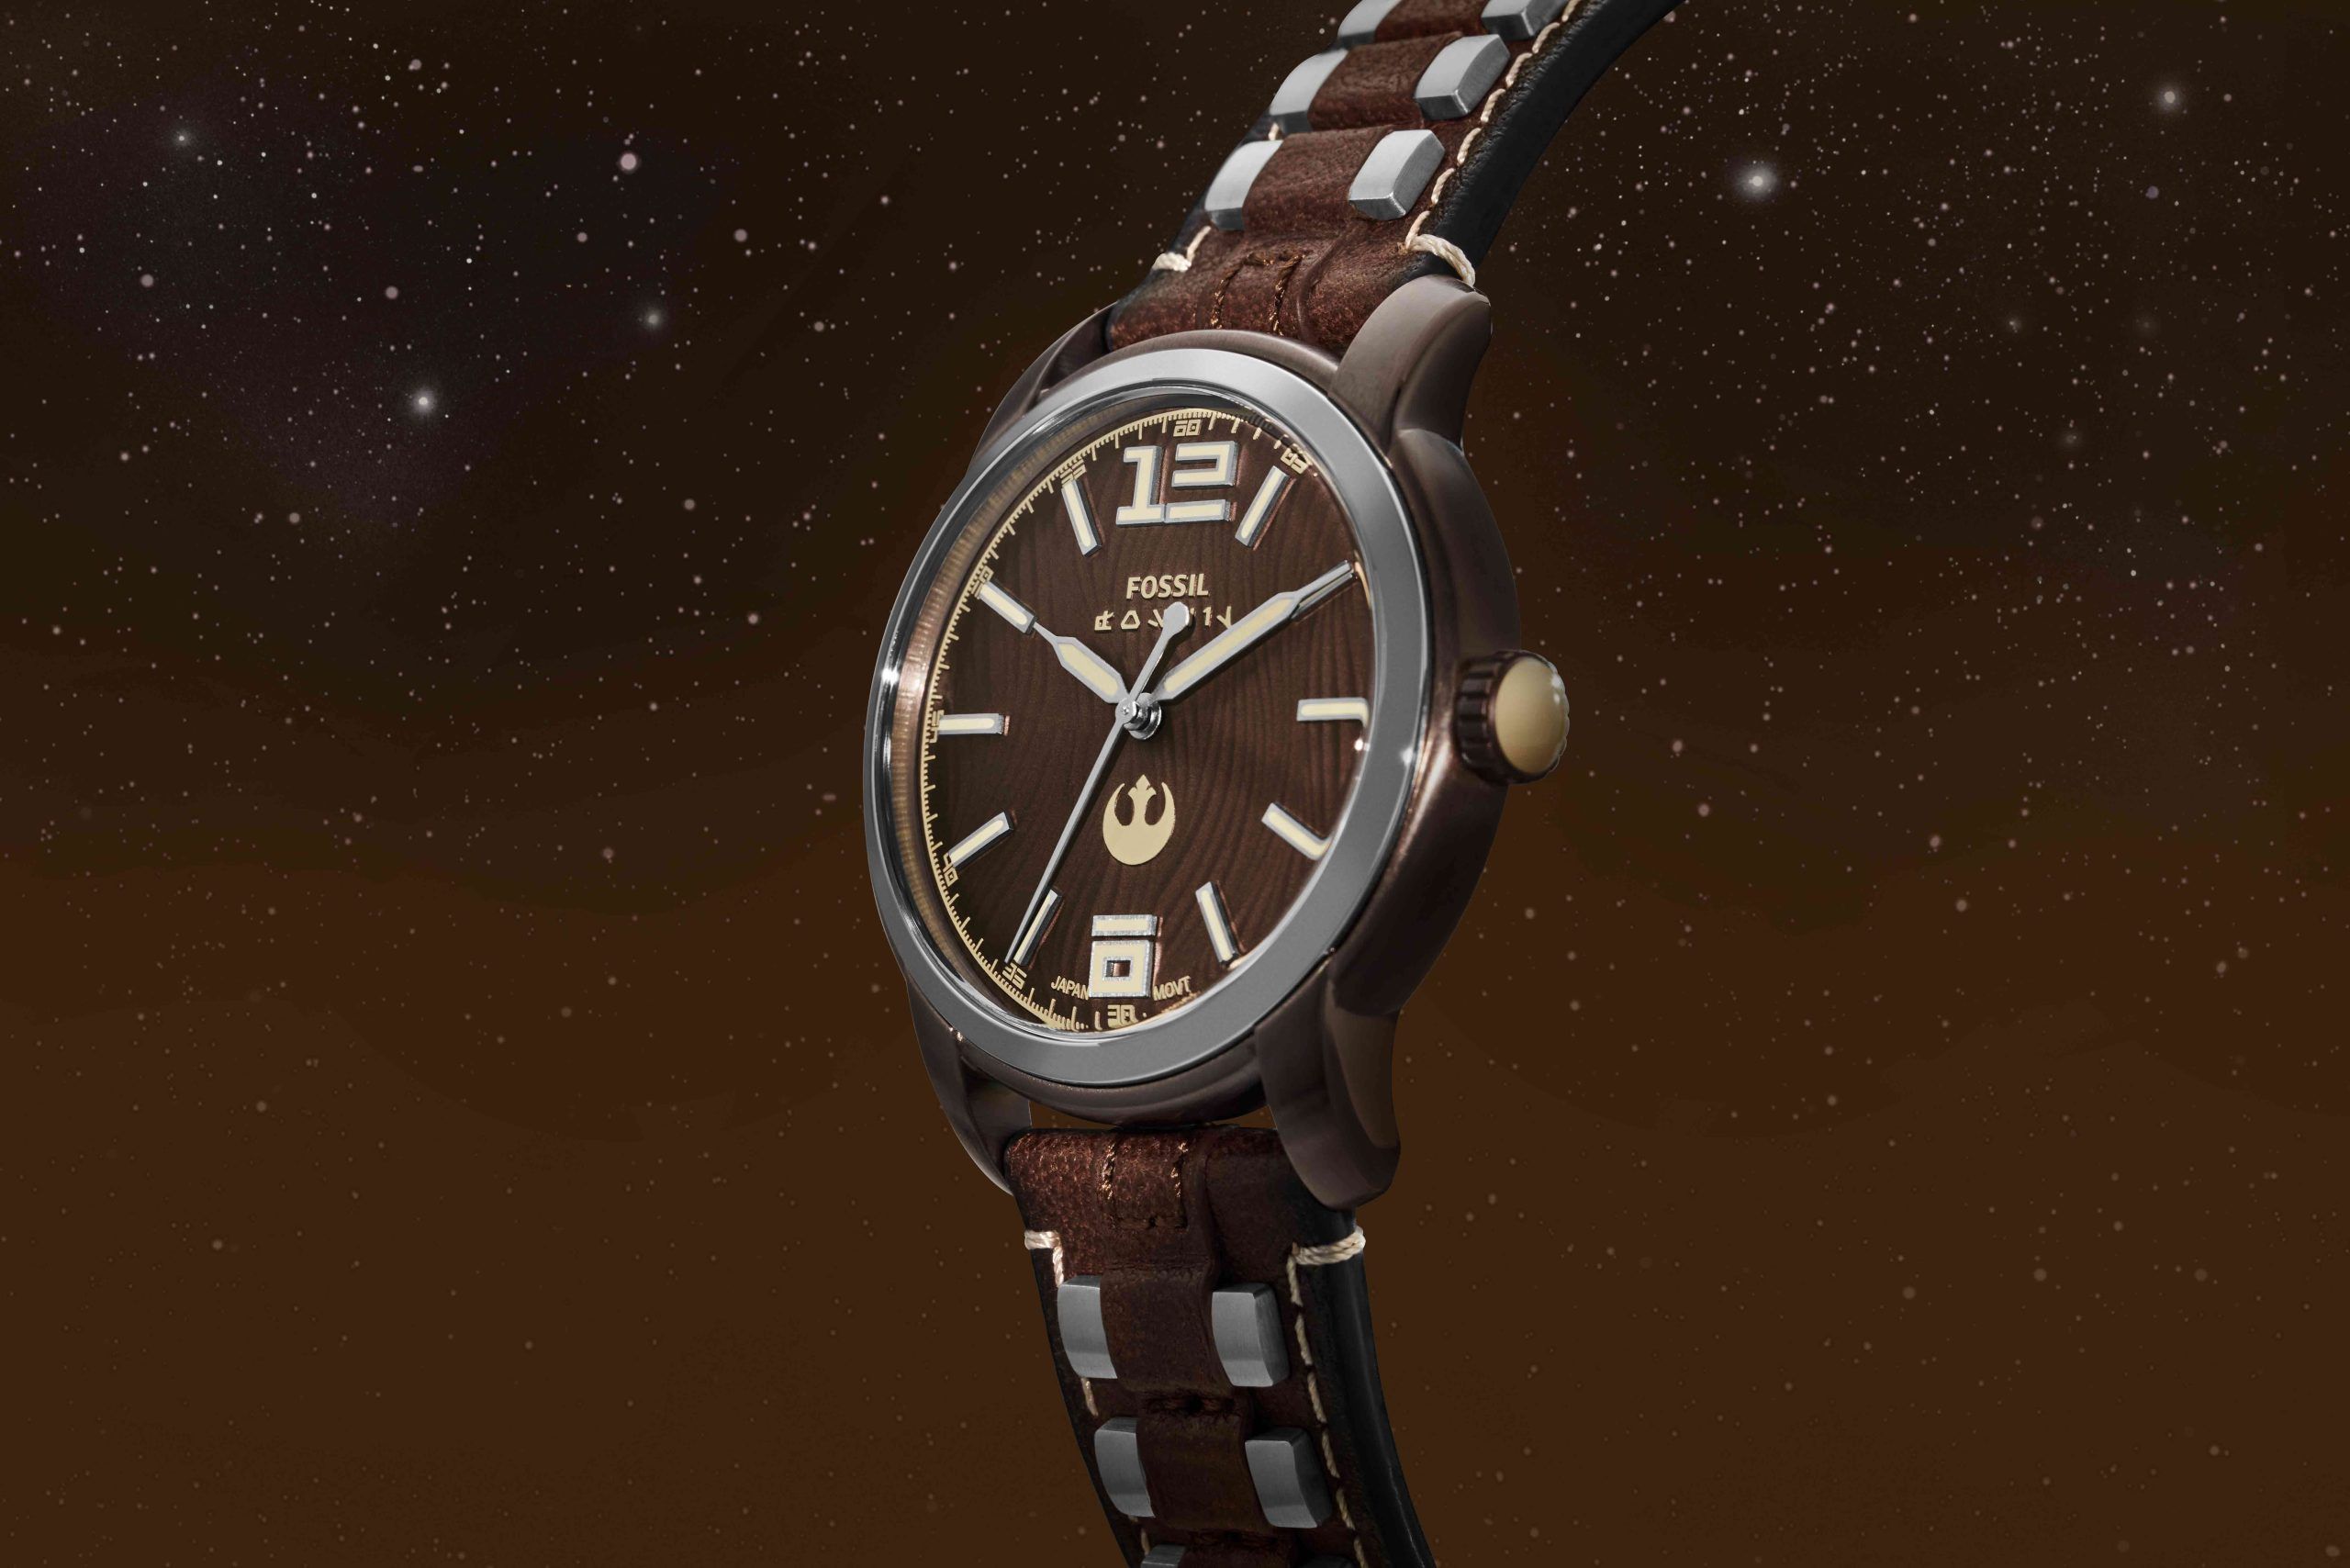 Fossil X Star Wars Chewbacca Limited Edition Strap Watch - Limited Edition  /1083 | eBay